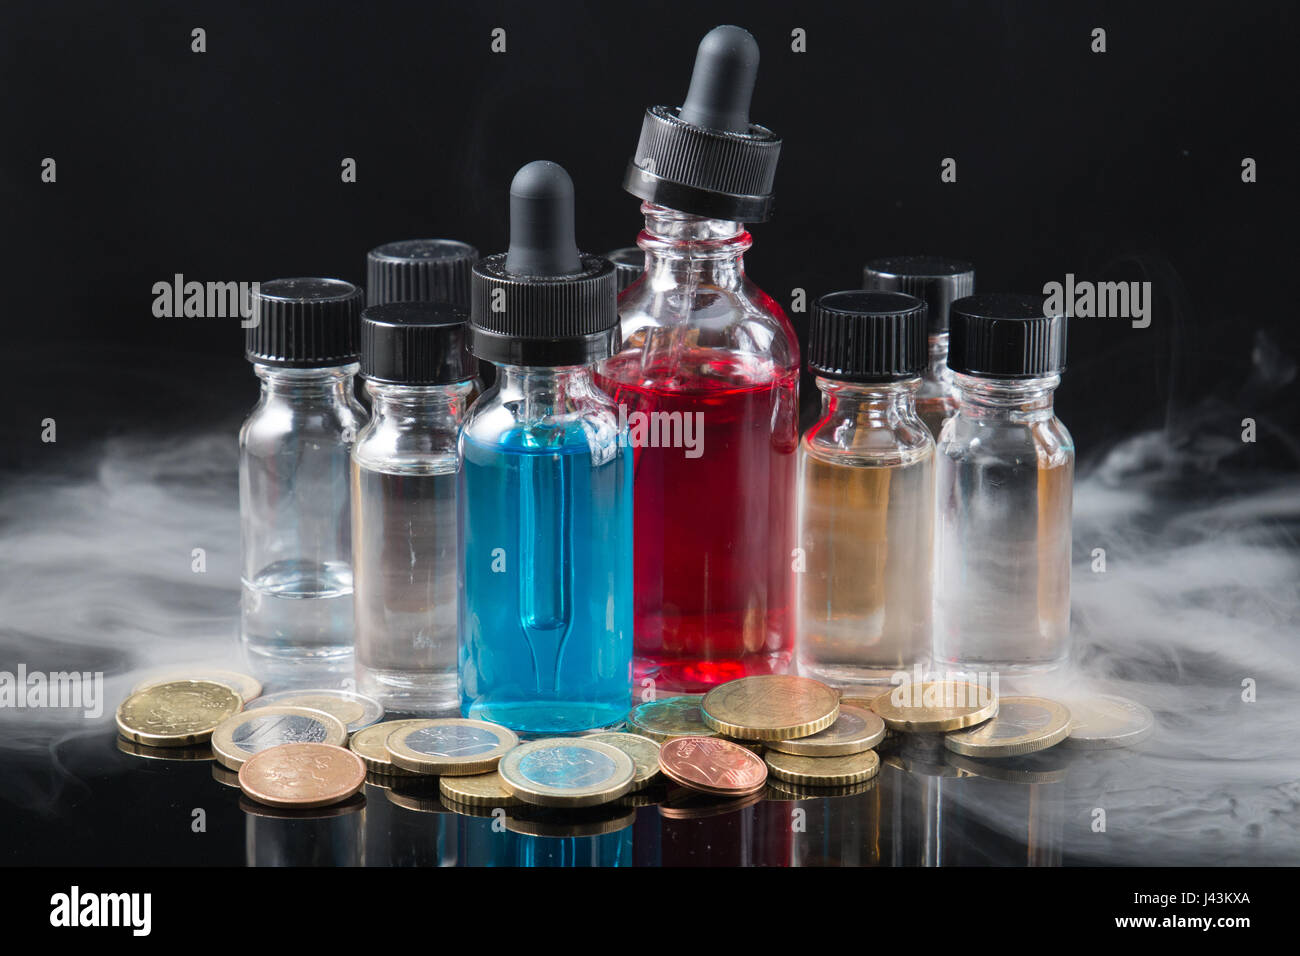 Vaporizer smoke with juice bottles and money Stock Photo